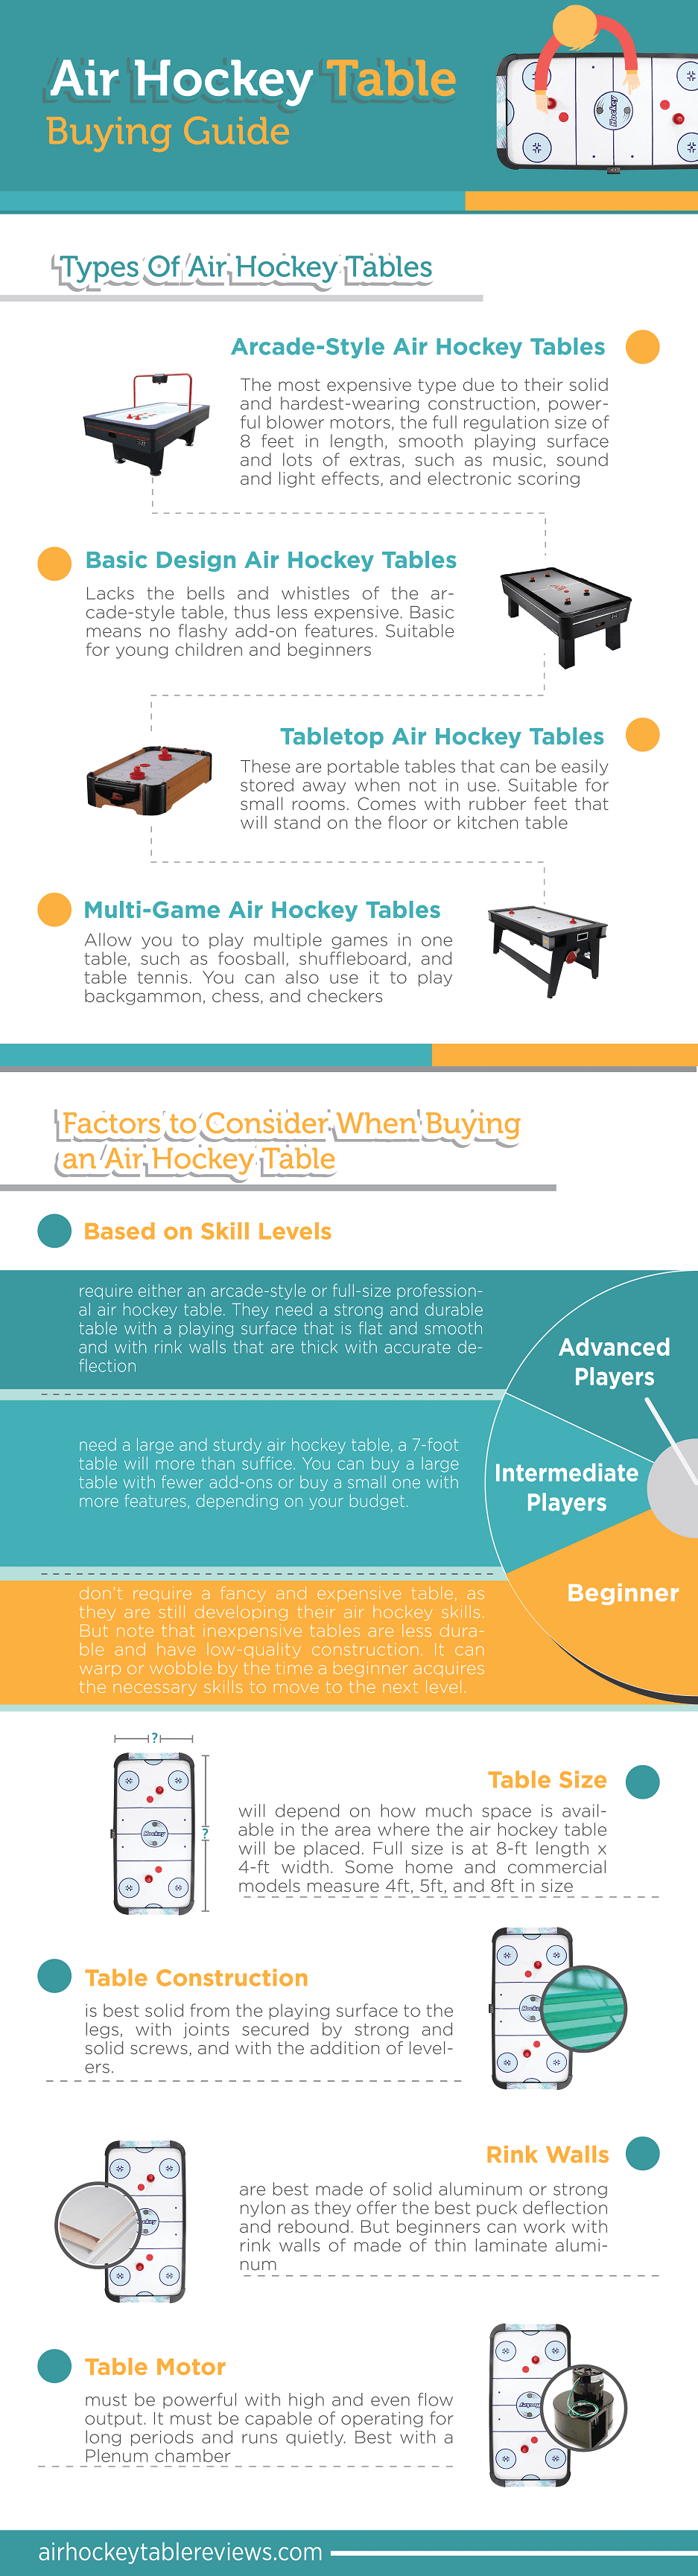 Air Hockey Buying Guide